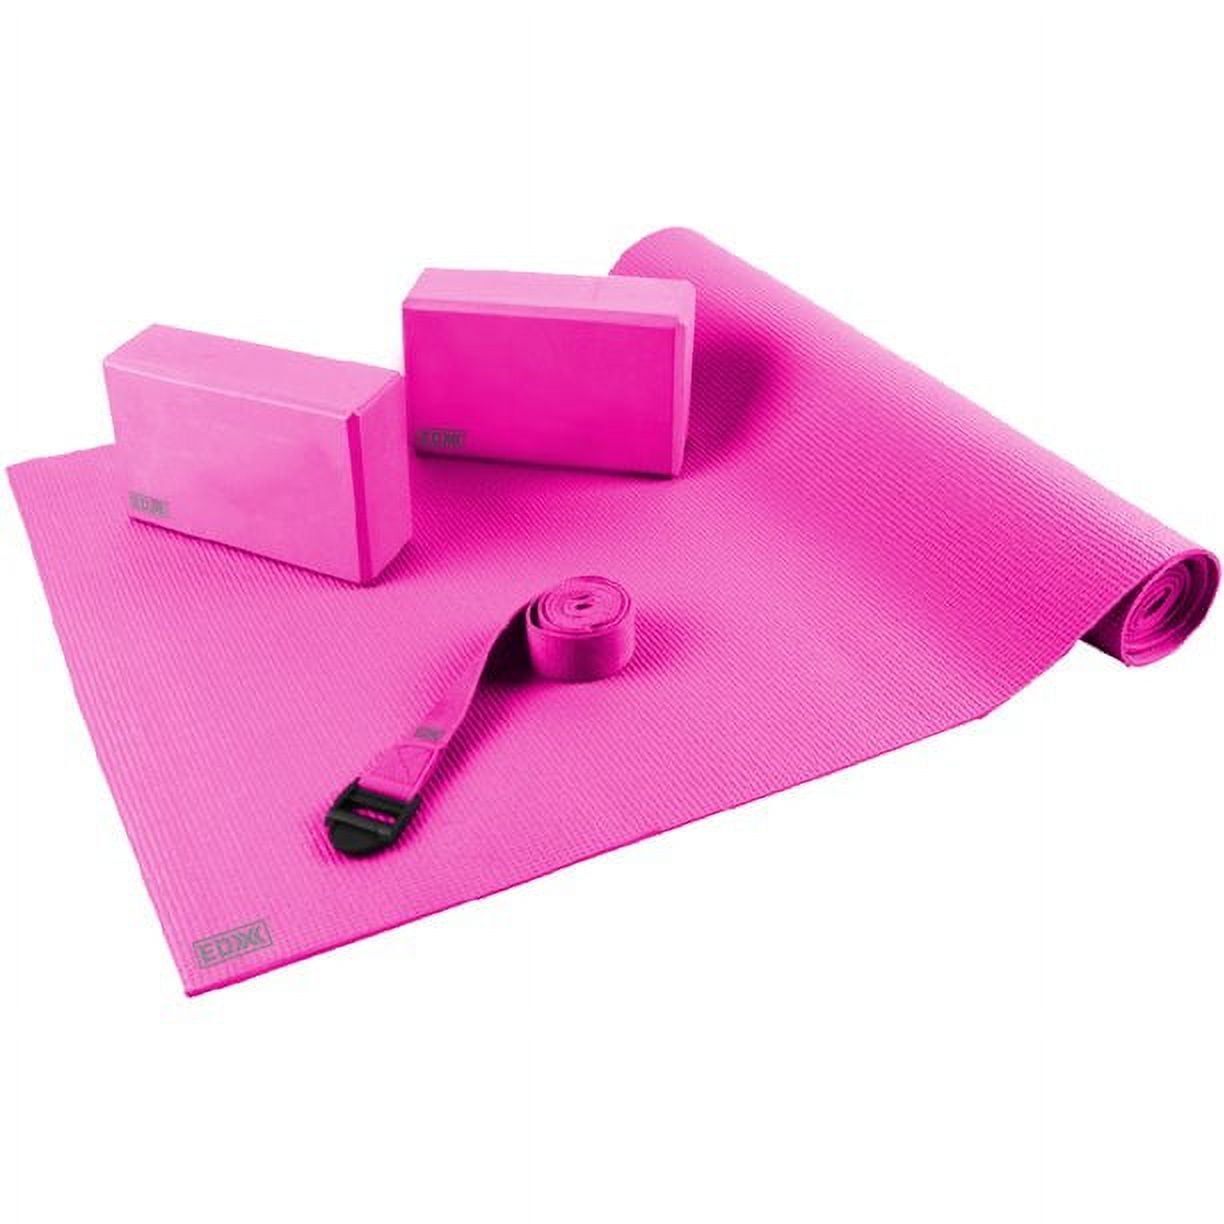 Roller Buddy Yoga Blocks 2 Pack - Sturdy Foam Yoga Block Set with Strap  Pink NIP